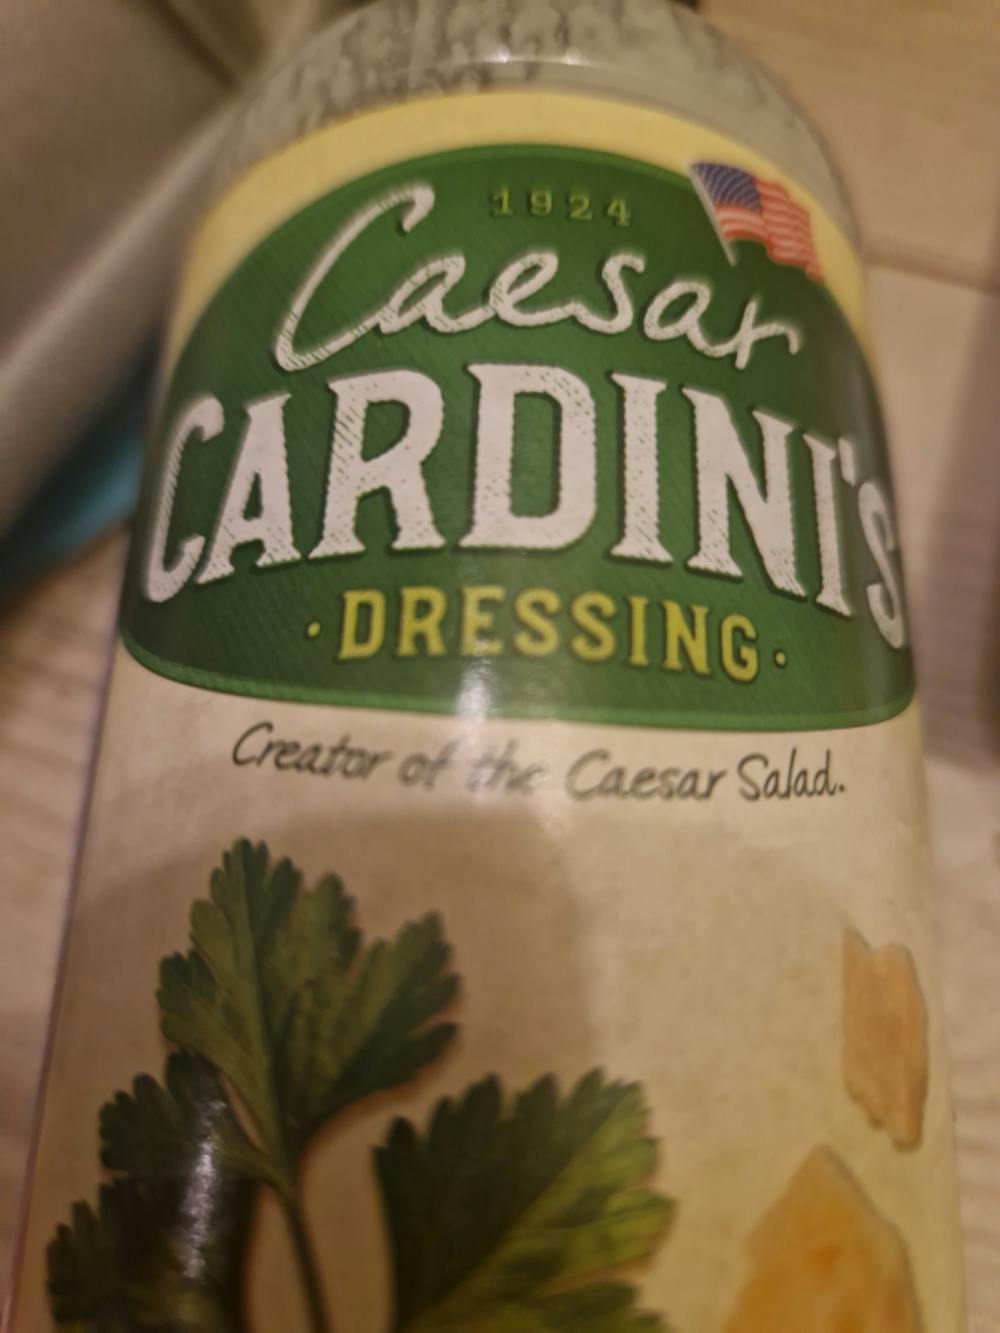 Caesar dressing, Cardini's